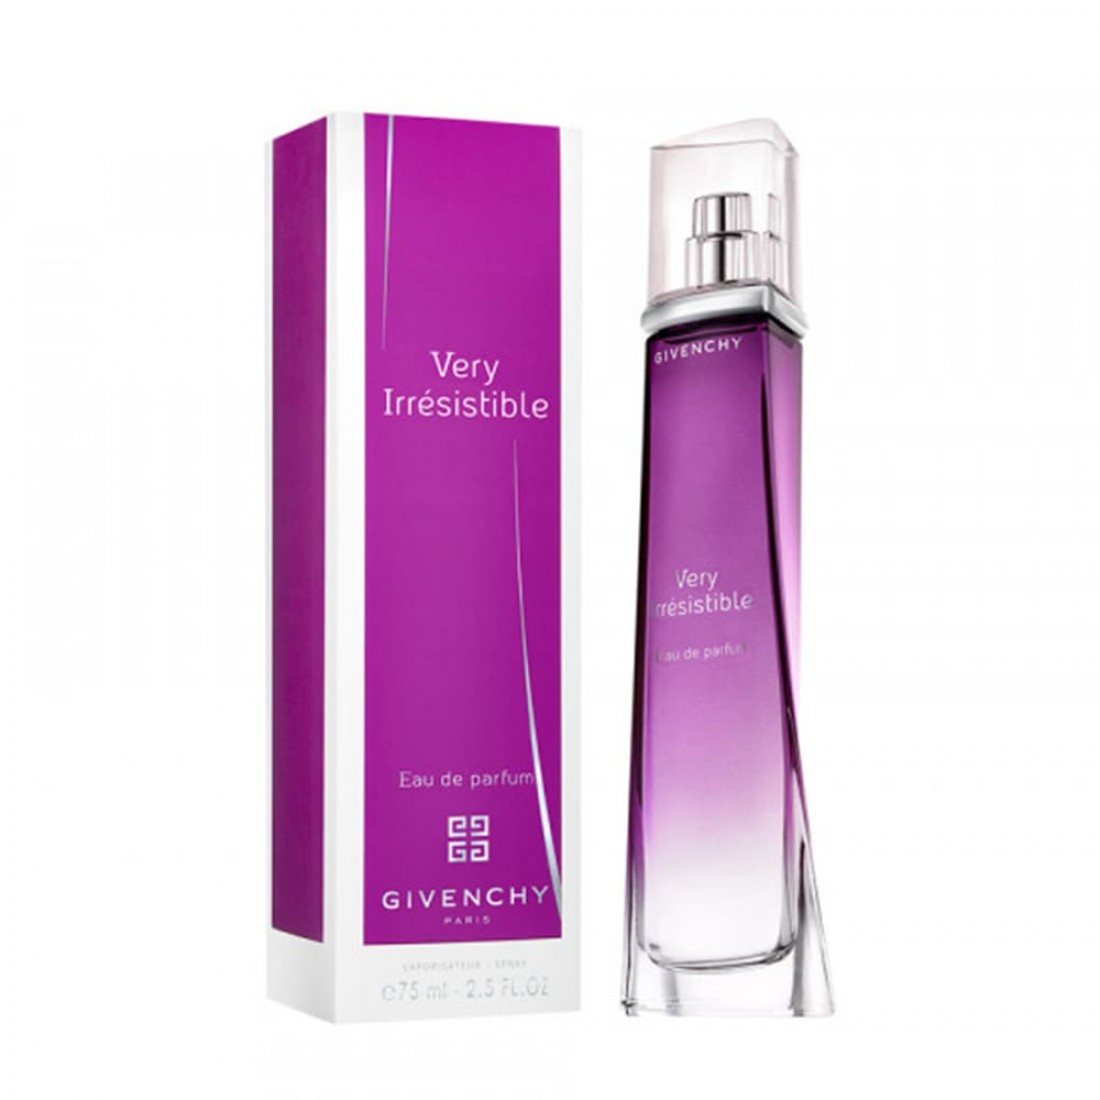 Perfume Givenchy Very Irresistible for Women - Eau de Parfum 75 ml - عطر